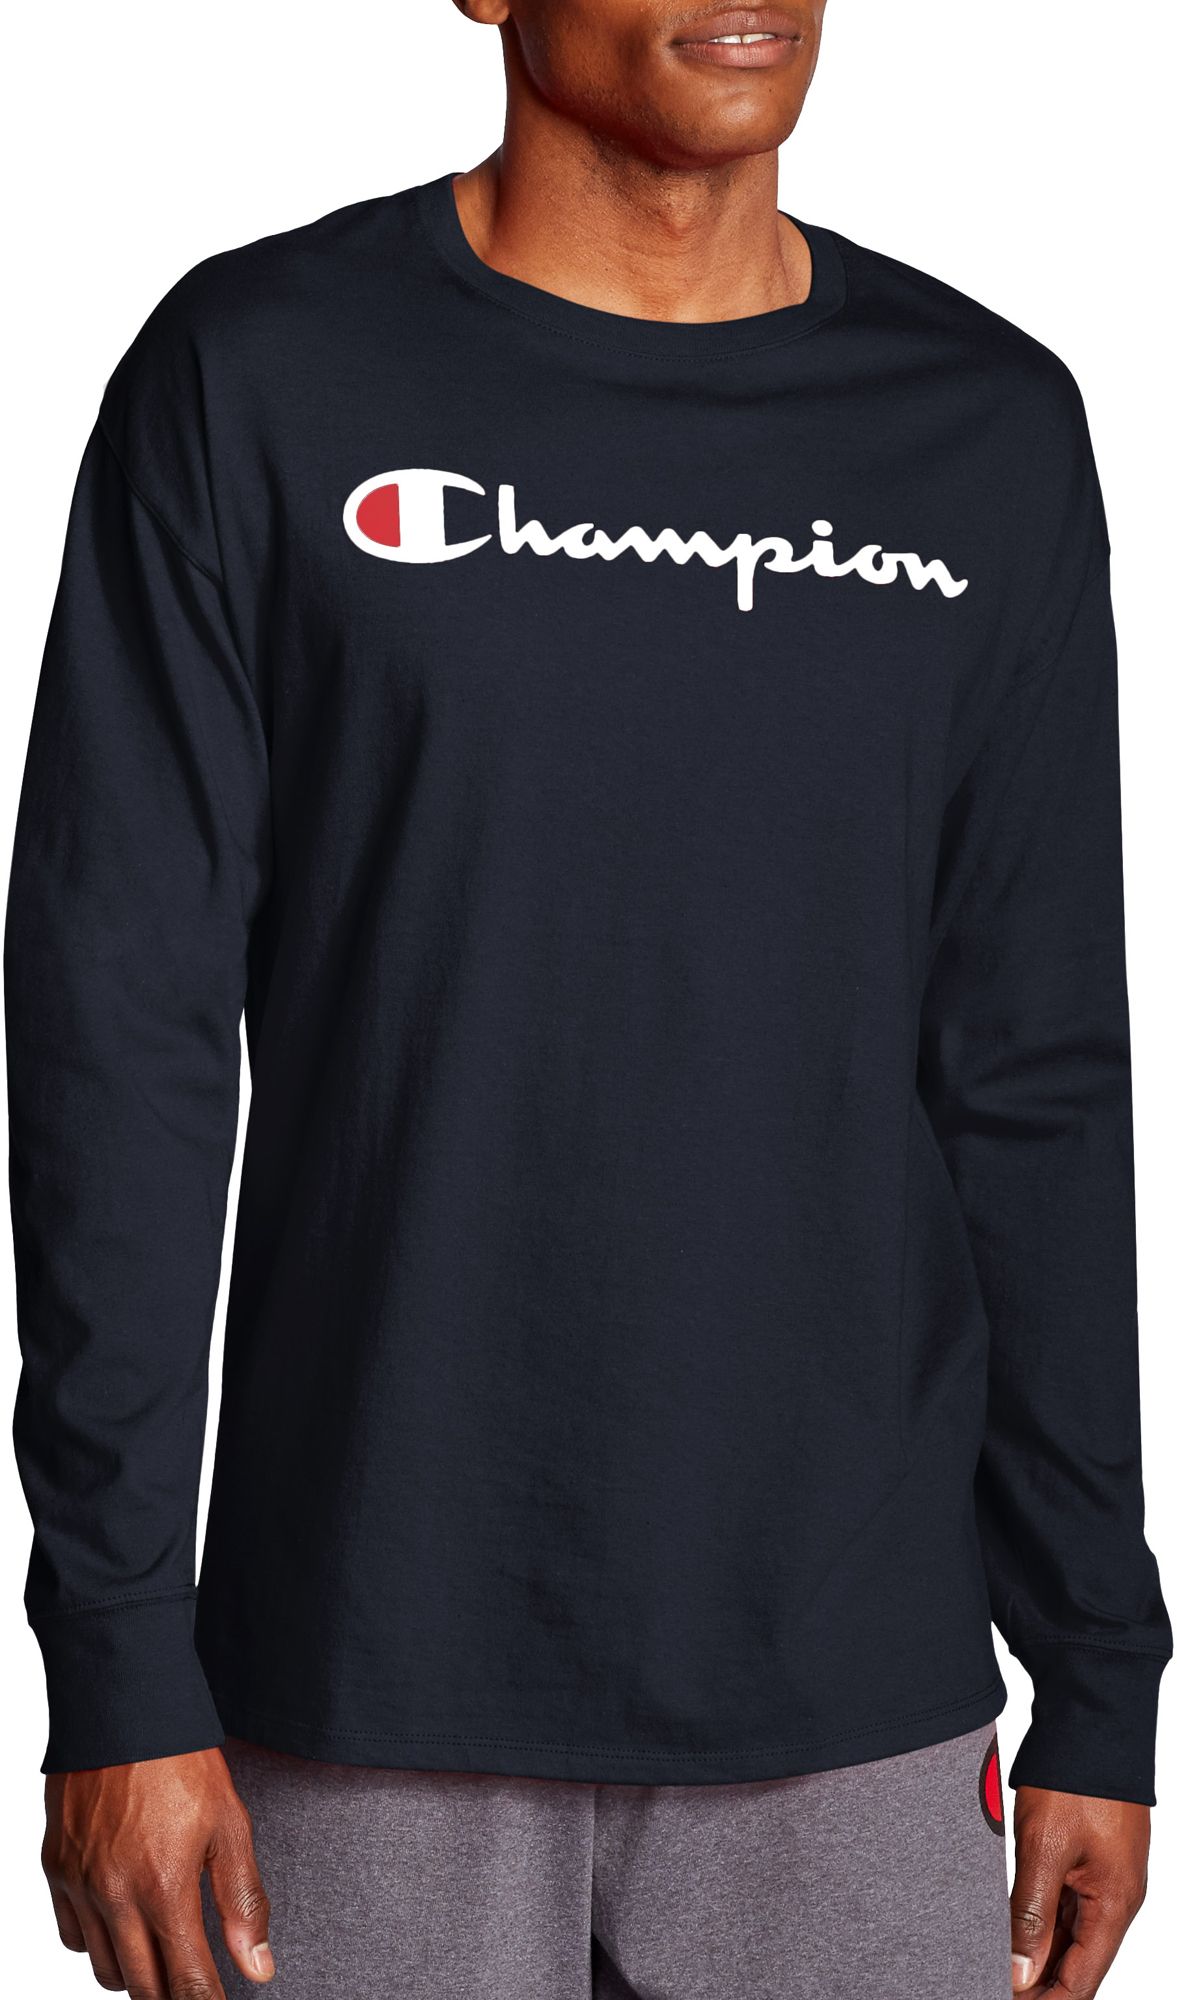 champion long sleeve shirt